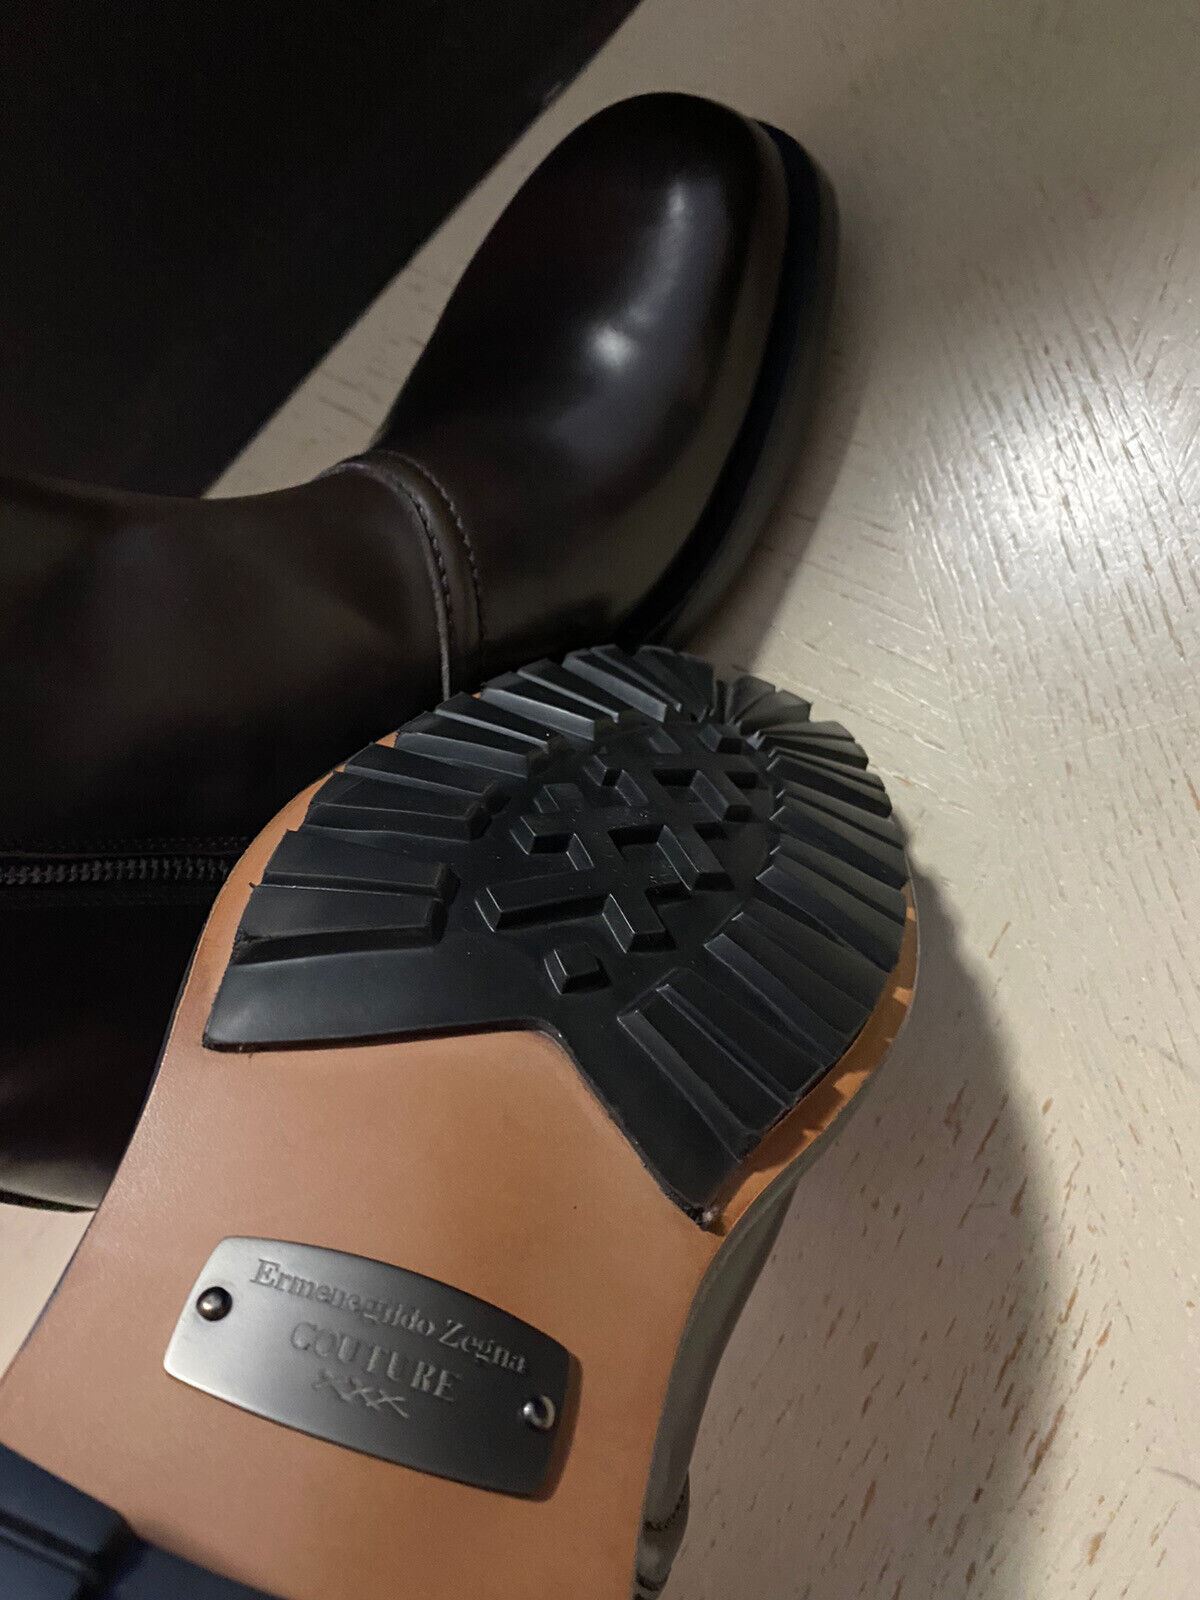 New $1595 Ermenegildo Zegna Couture Calfskin Leather Boots Shoes DK Brown 11 US